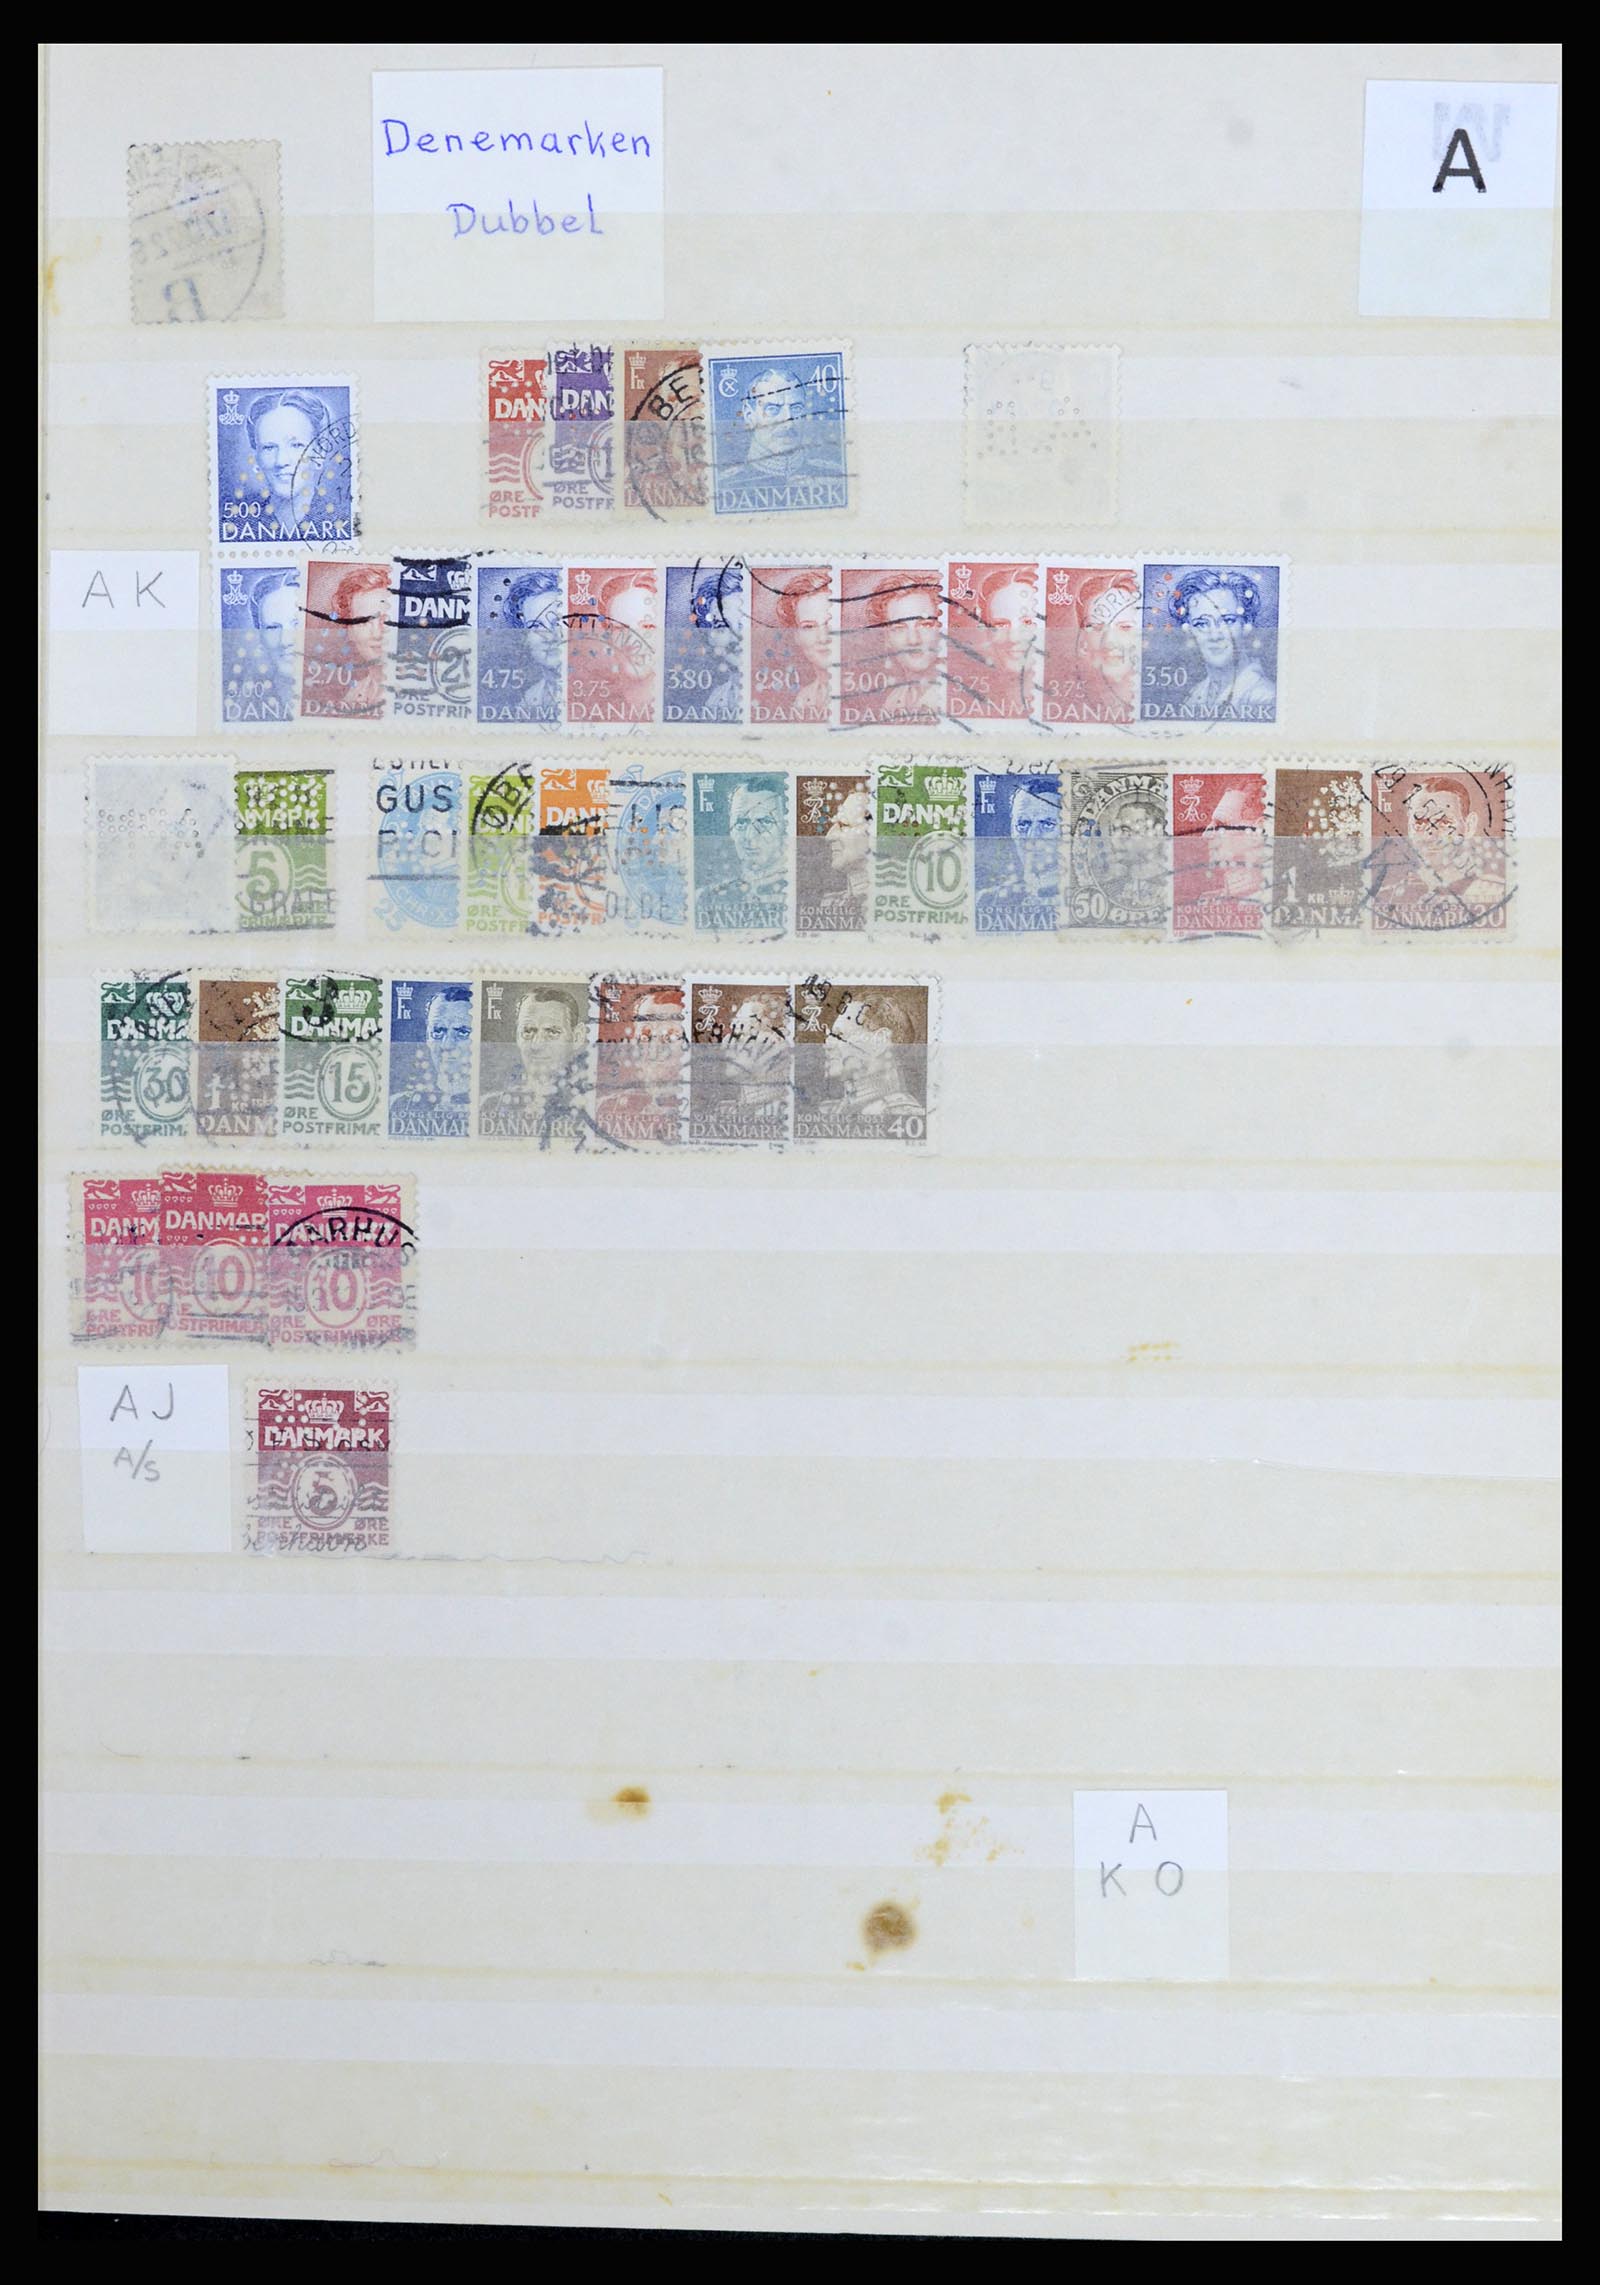 37056 042 - Stamp collection 37056 Denmark perfins.